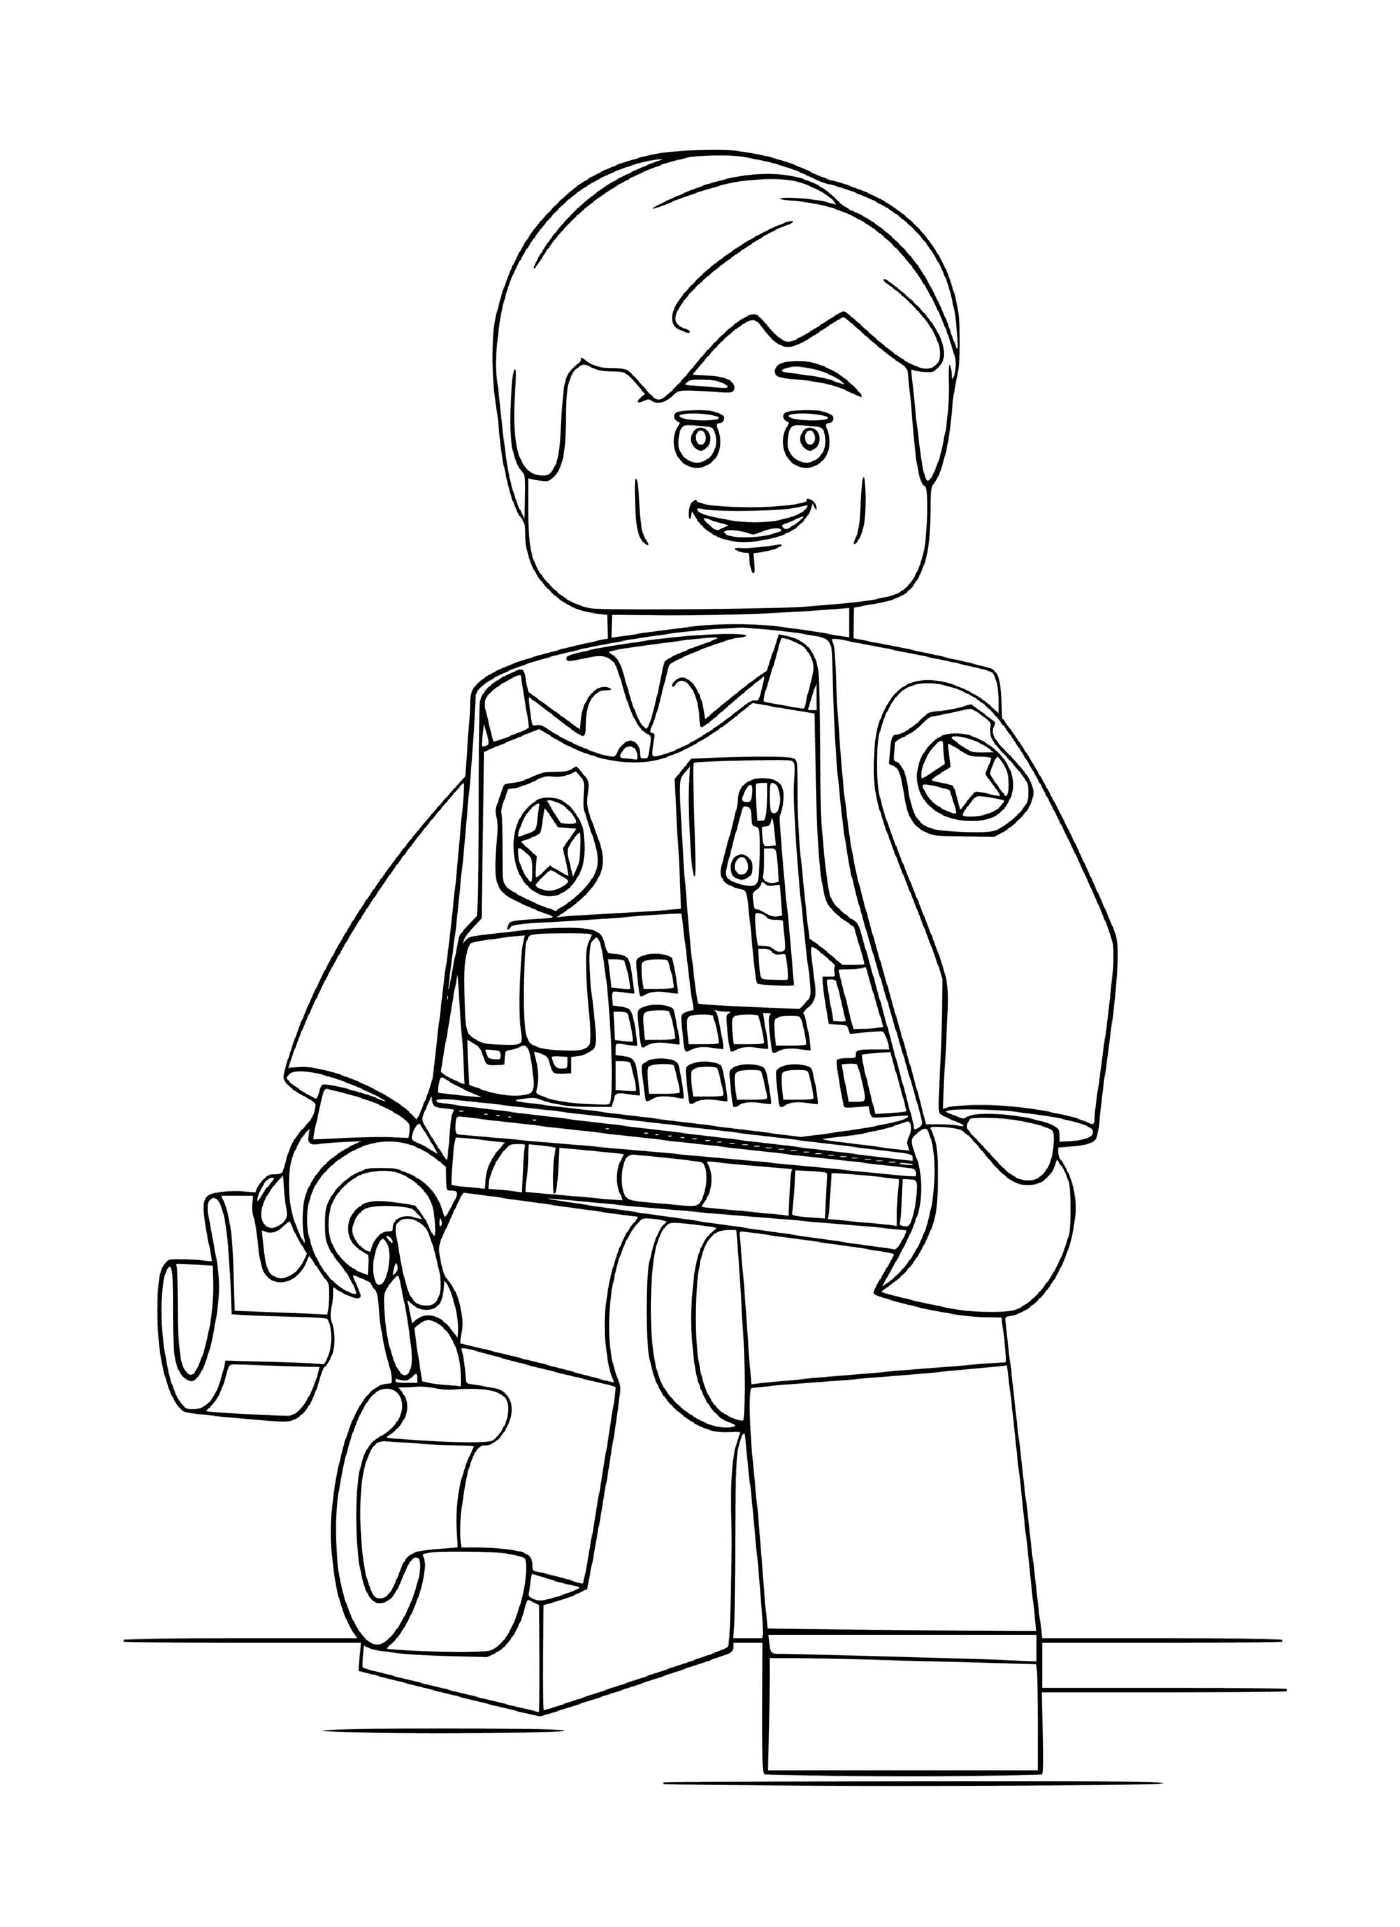  Character Lego police handcuffed 